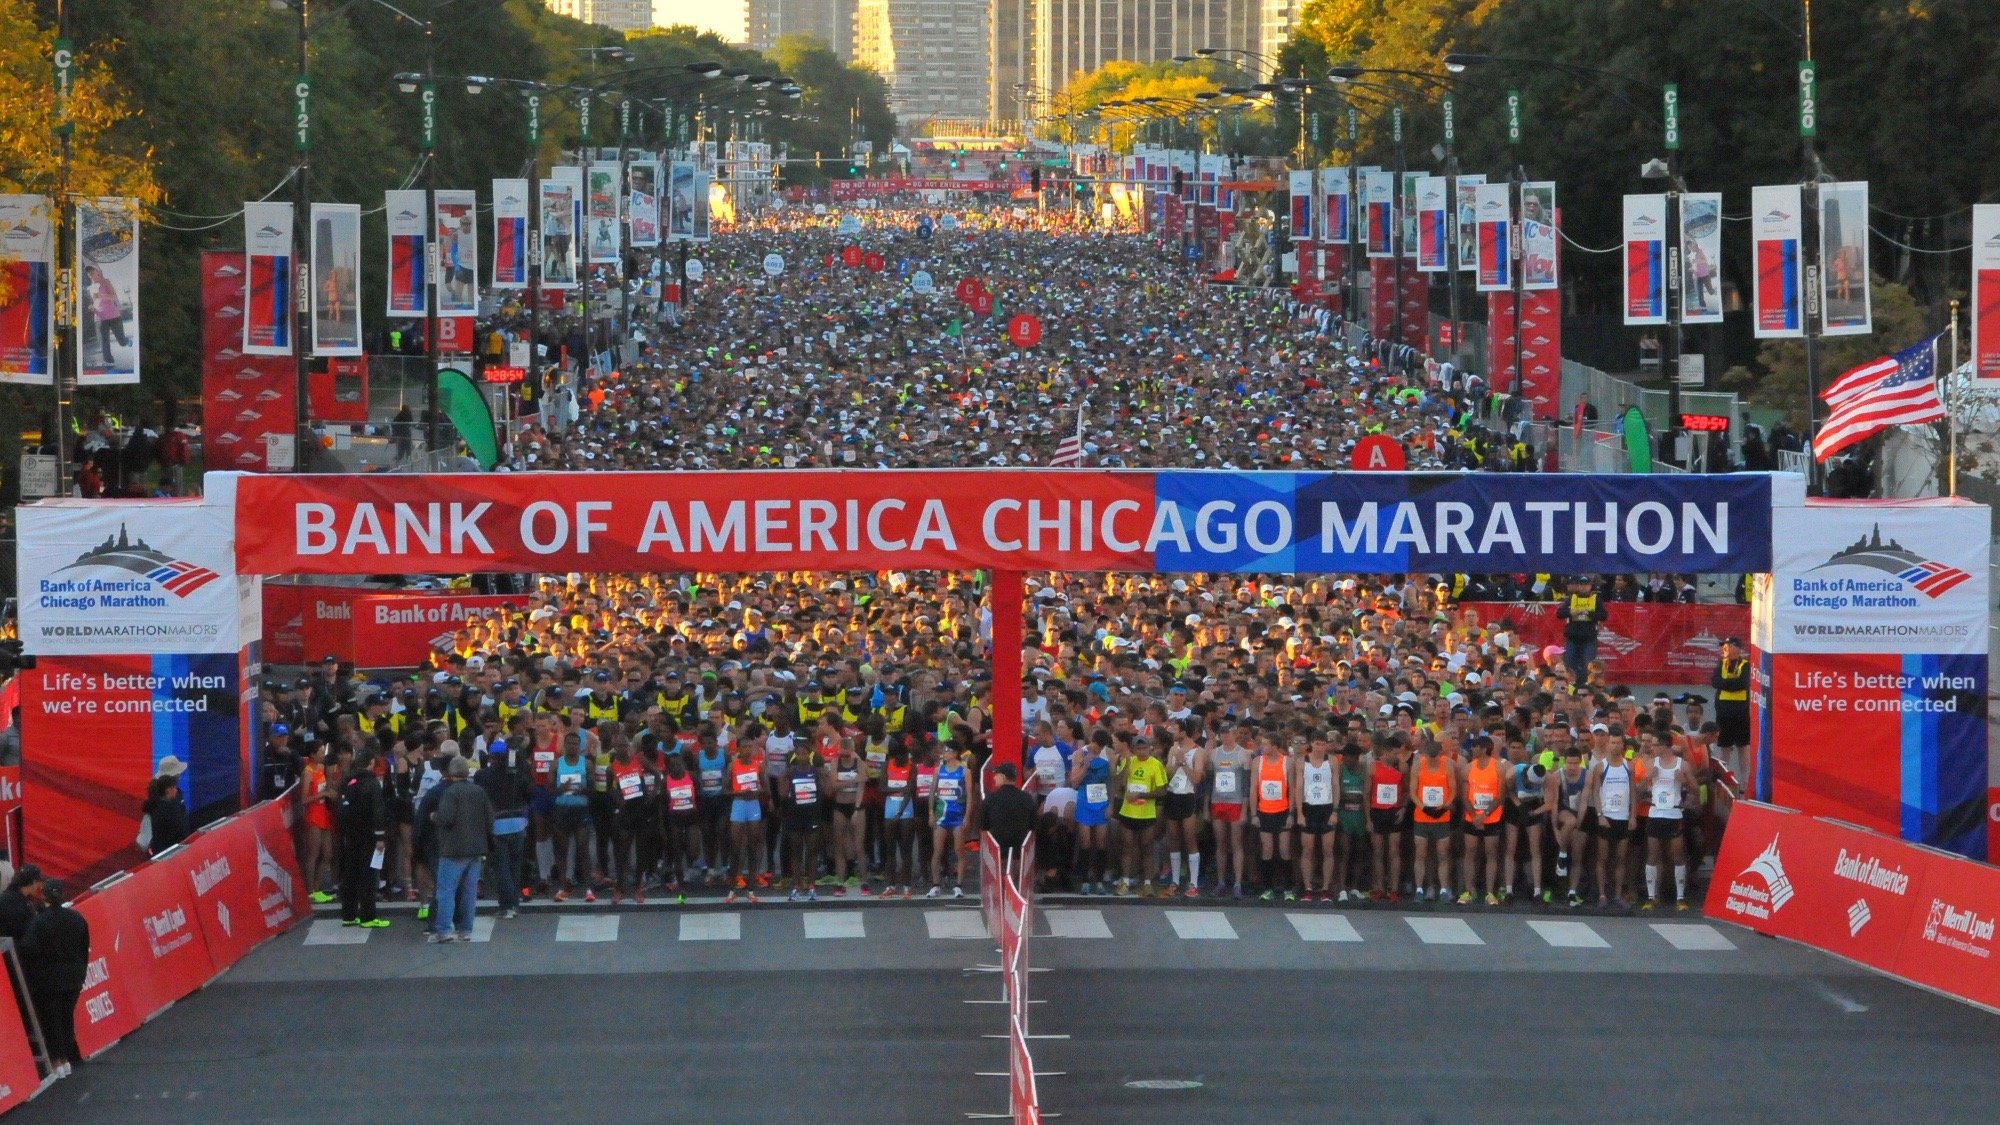 Bank of America Chicago Marathon 2021 Campaign